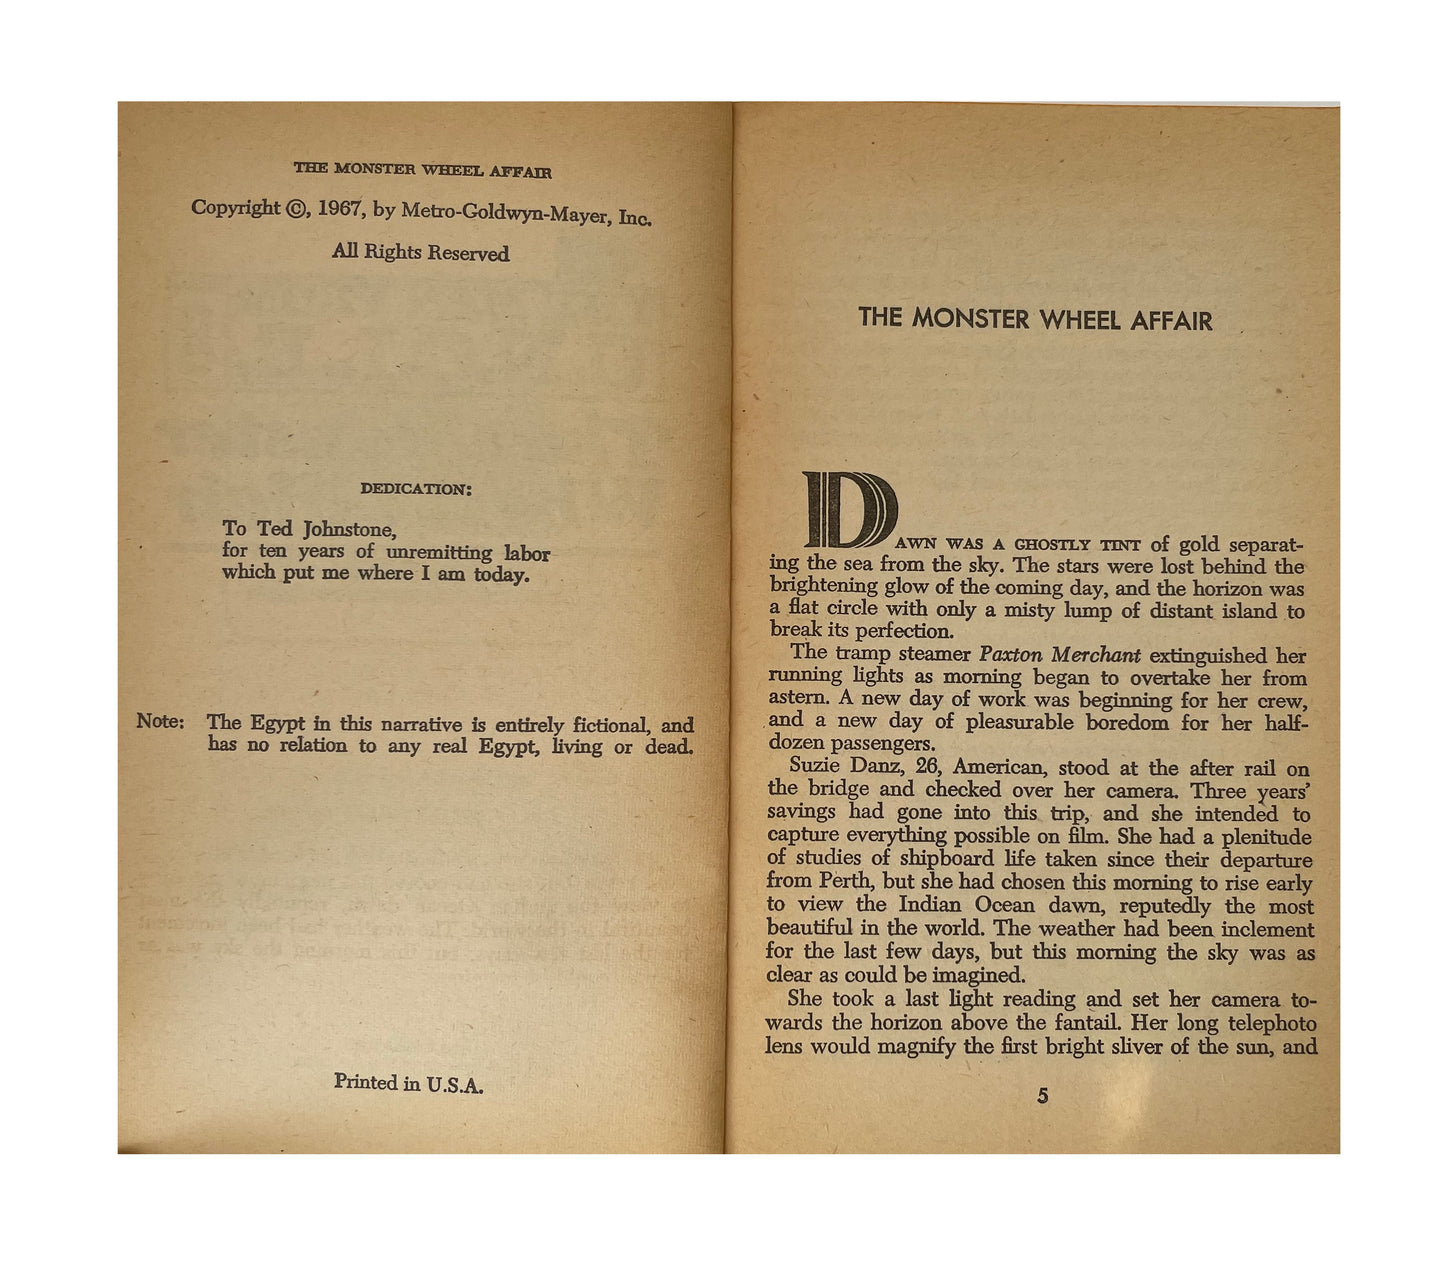 Vintage The Man From U.N.C.L.E The Monster Wheel Affair Paperback Novel 1967 By David McDaniel